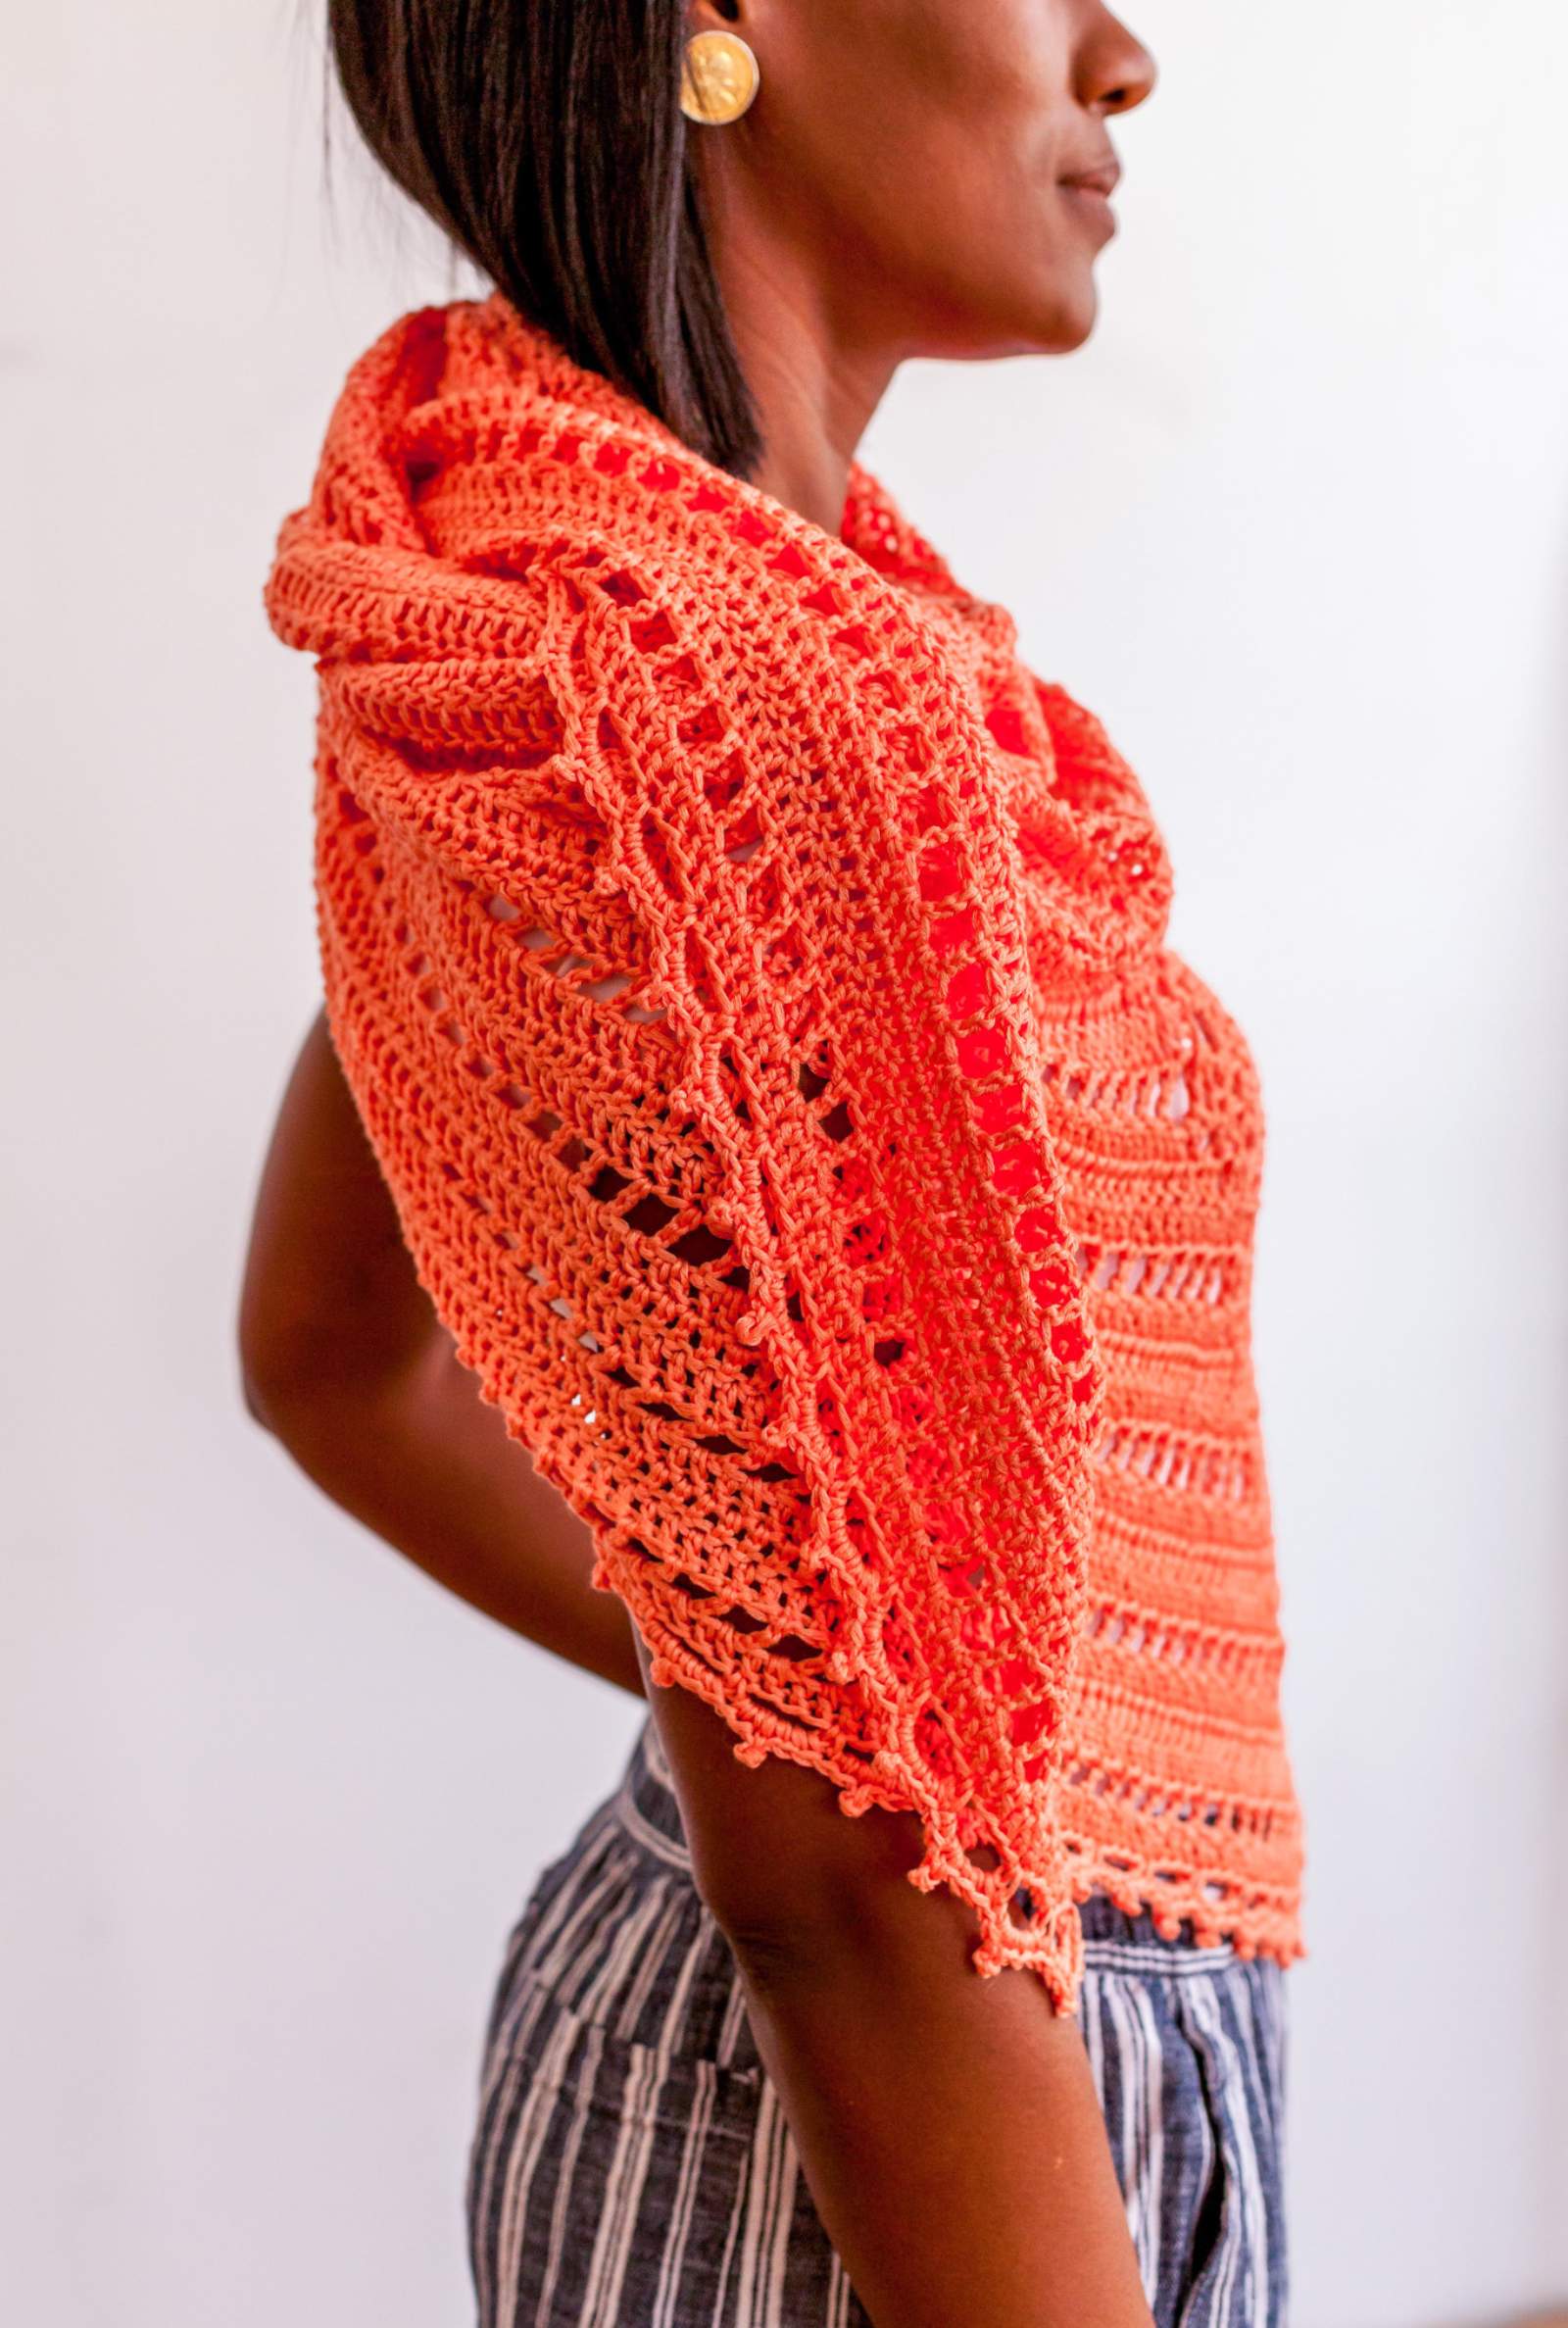 Montego Shawl // Crochet PDF Pattern